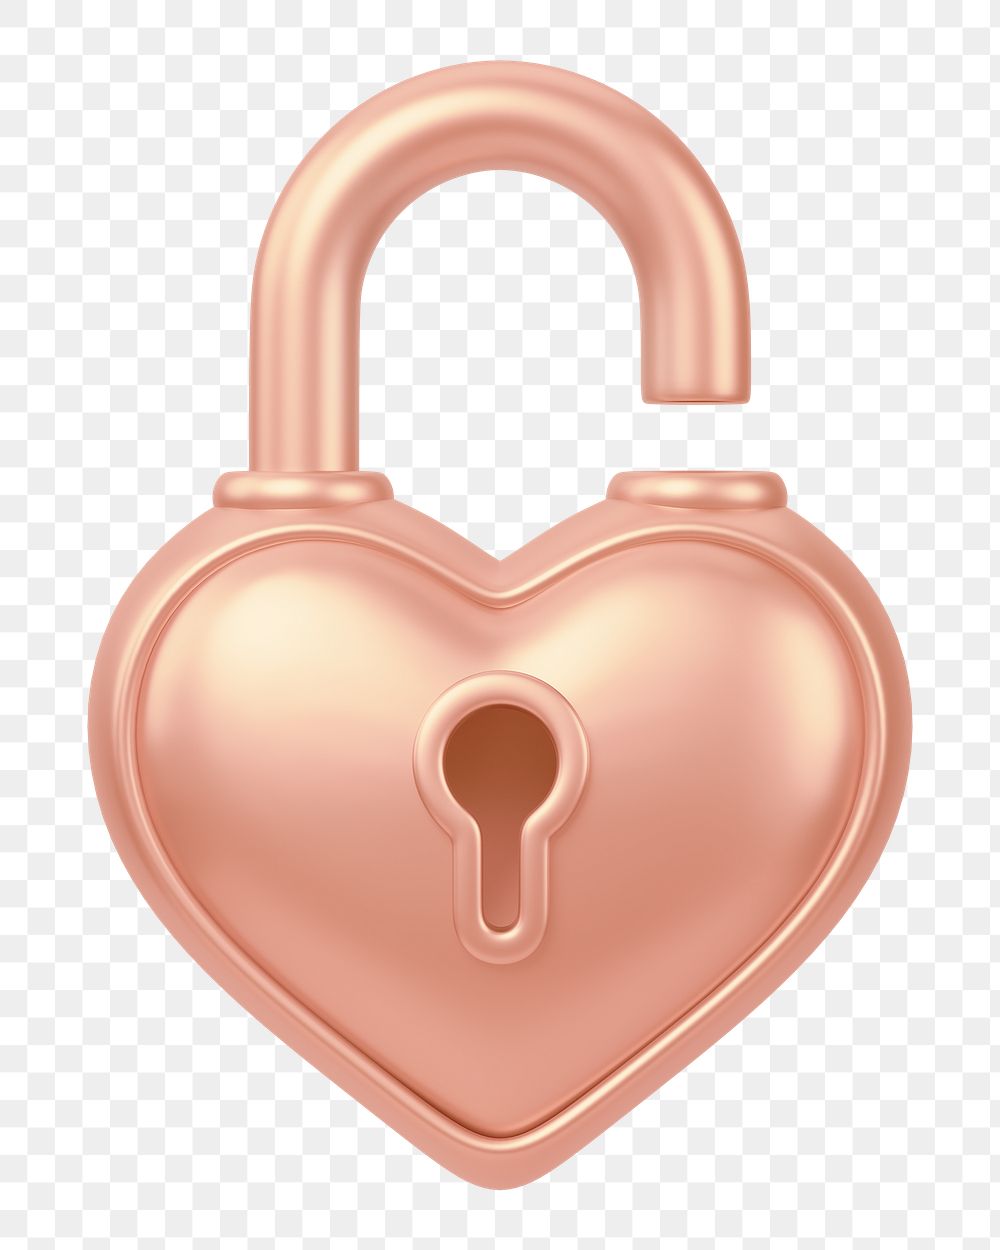 Copper heart padlock png 3D element, transparent background